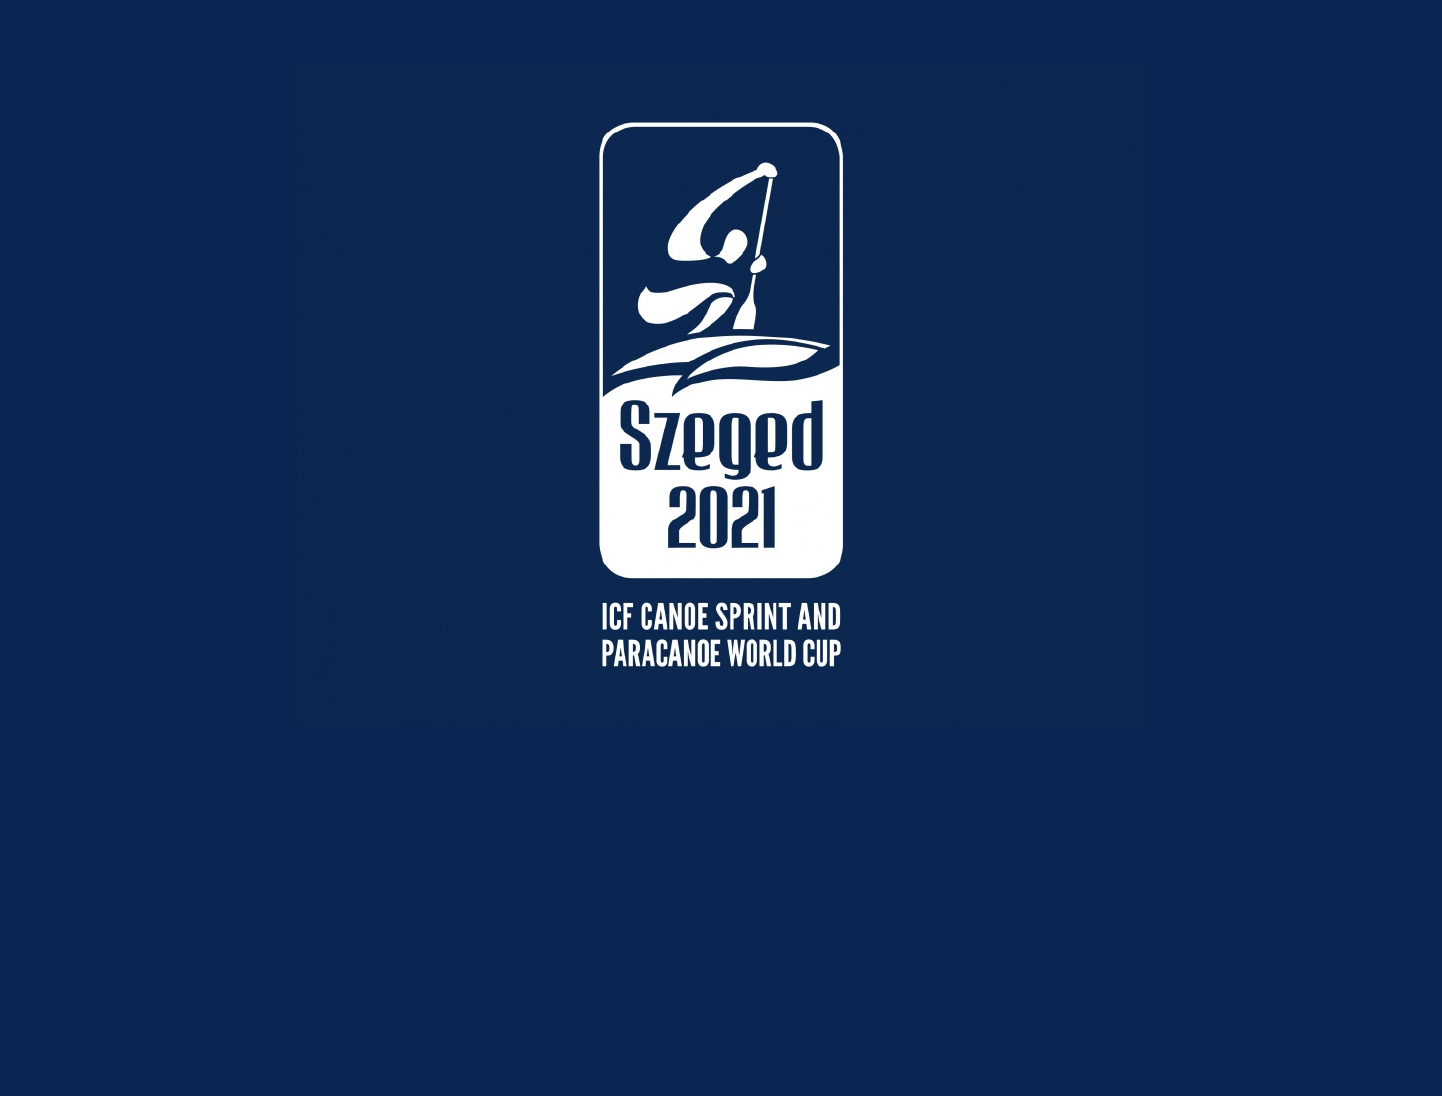 images/2021_news/velocità_2021/Szeged_Copertina.png